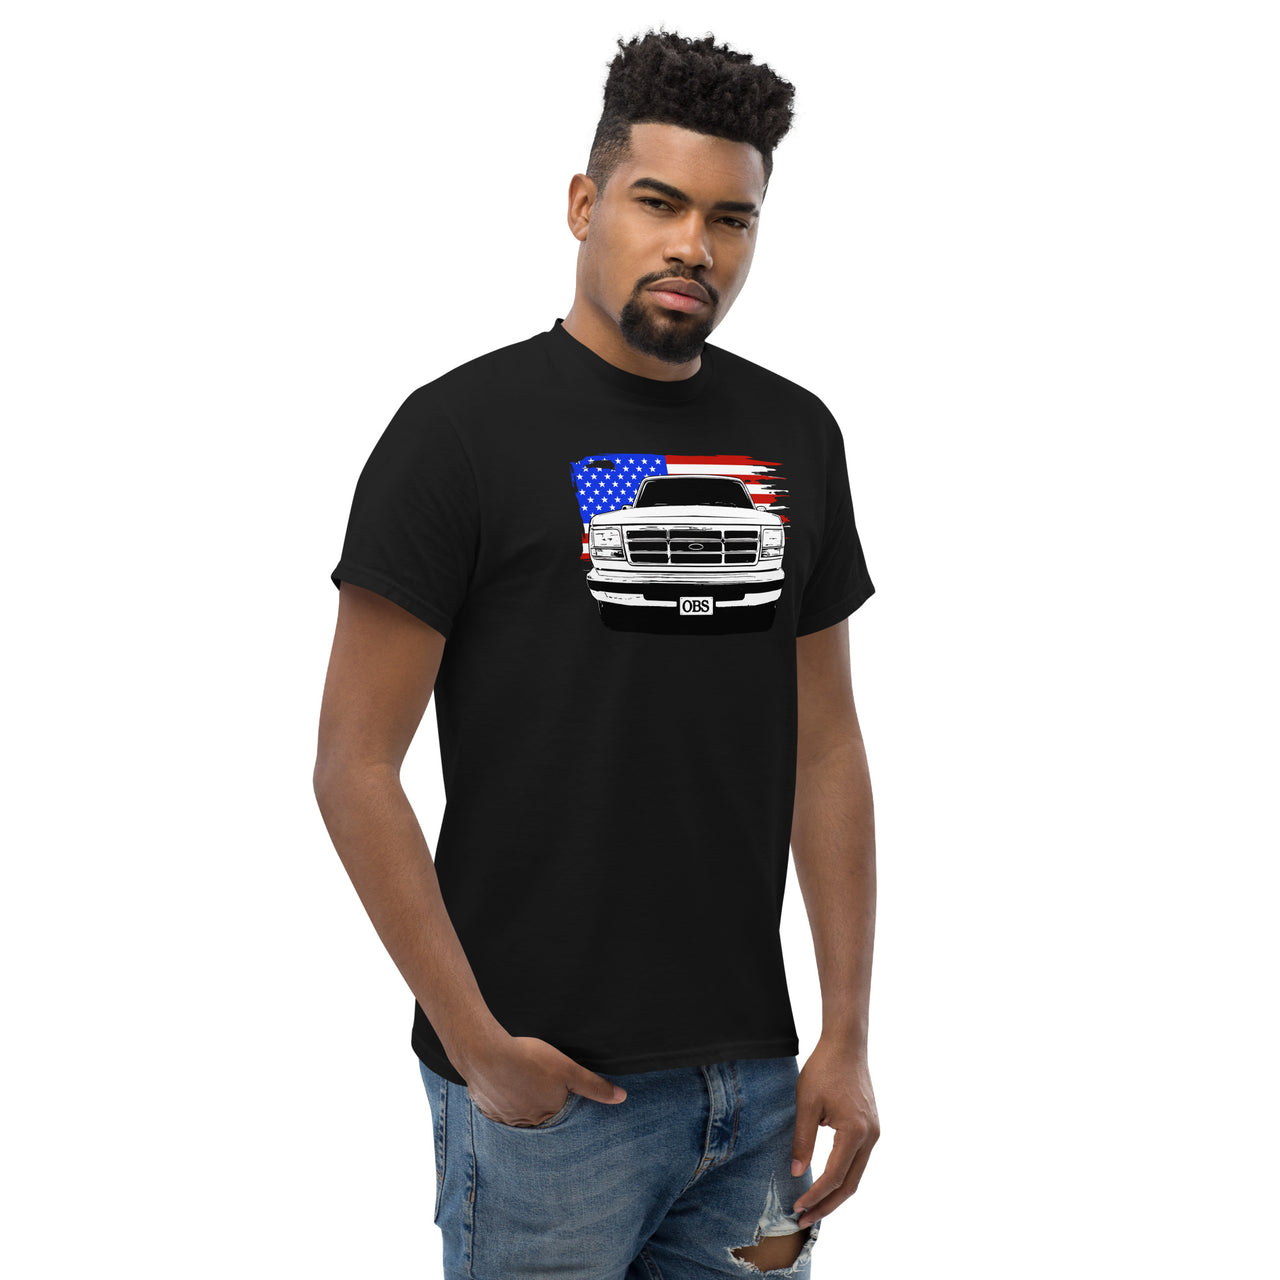 OBS Truck American Flag T-Shirt modeled in black